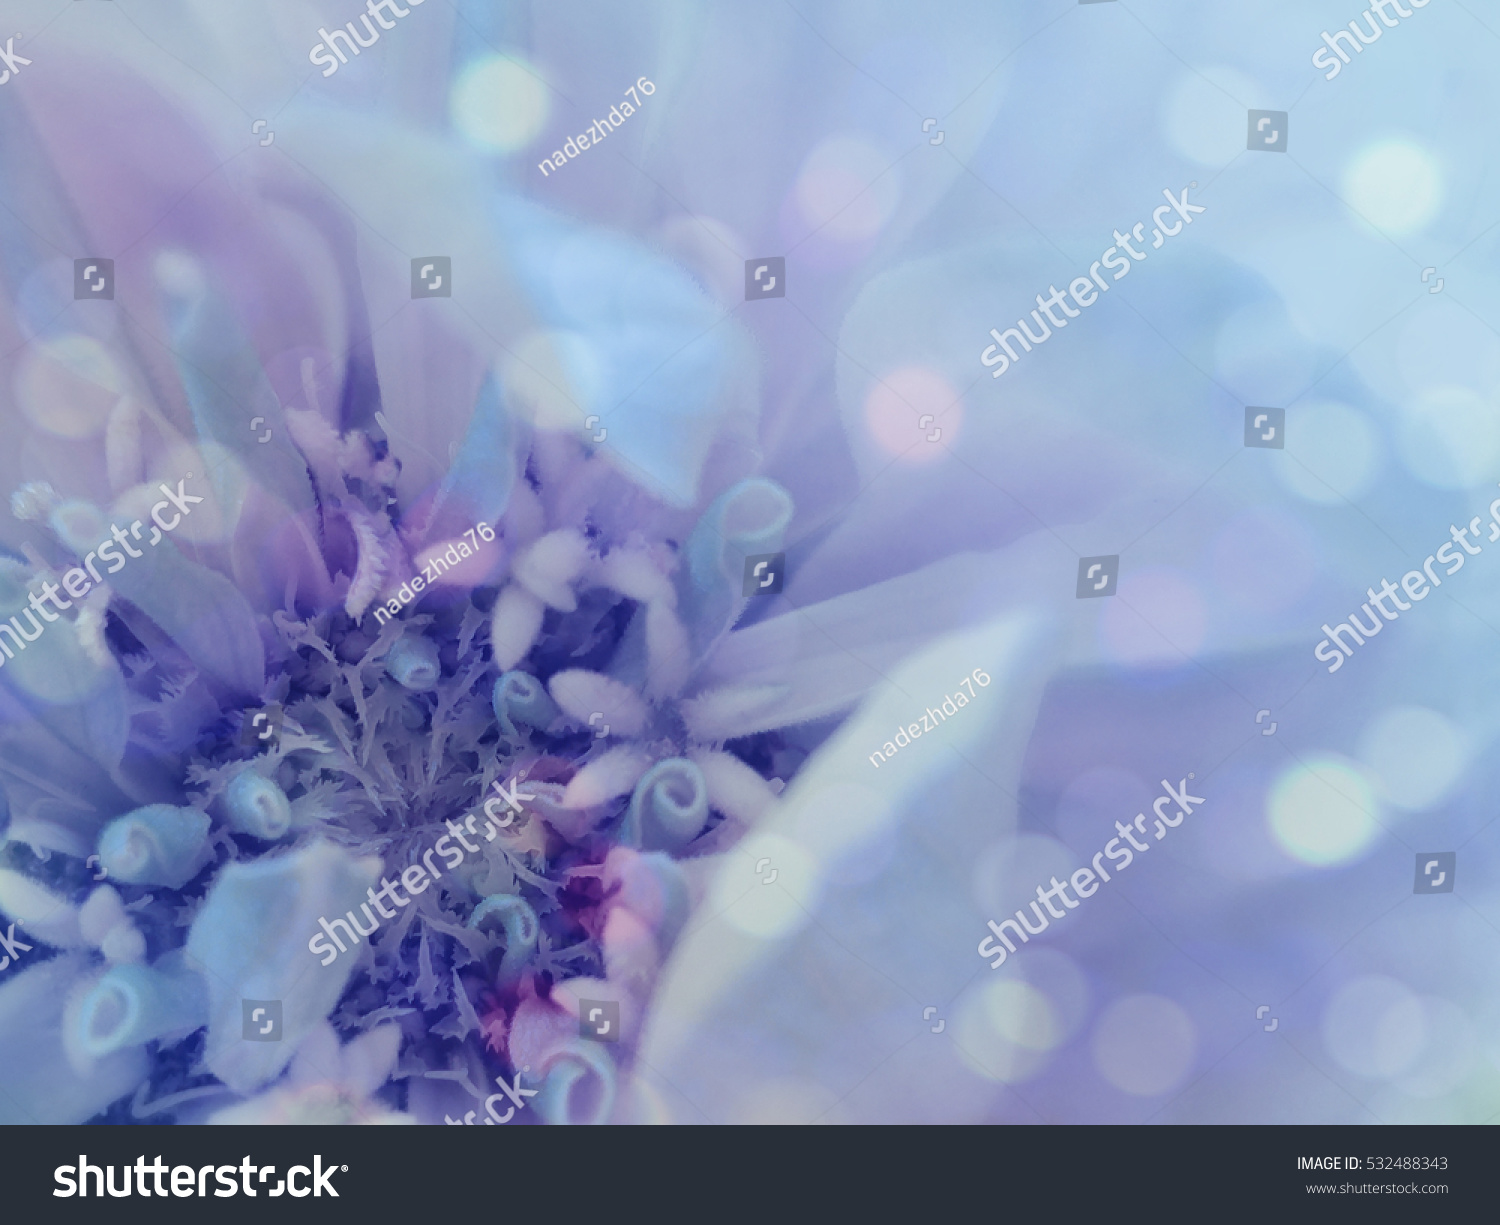 Edit Photos Free Online - blue-purple flower | Shutterstock Editor